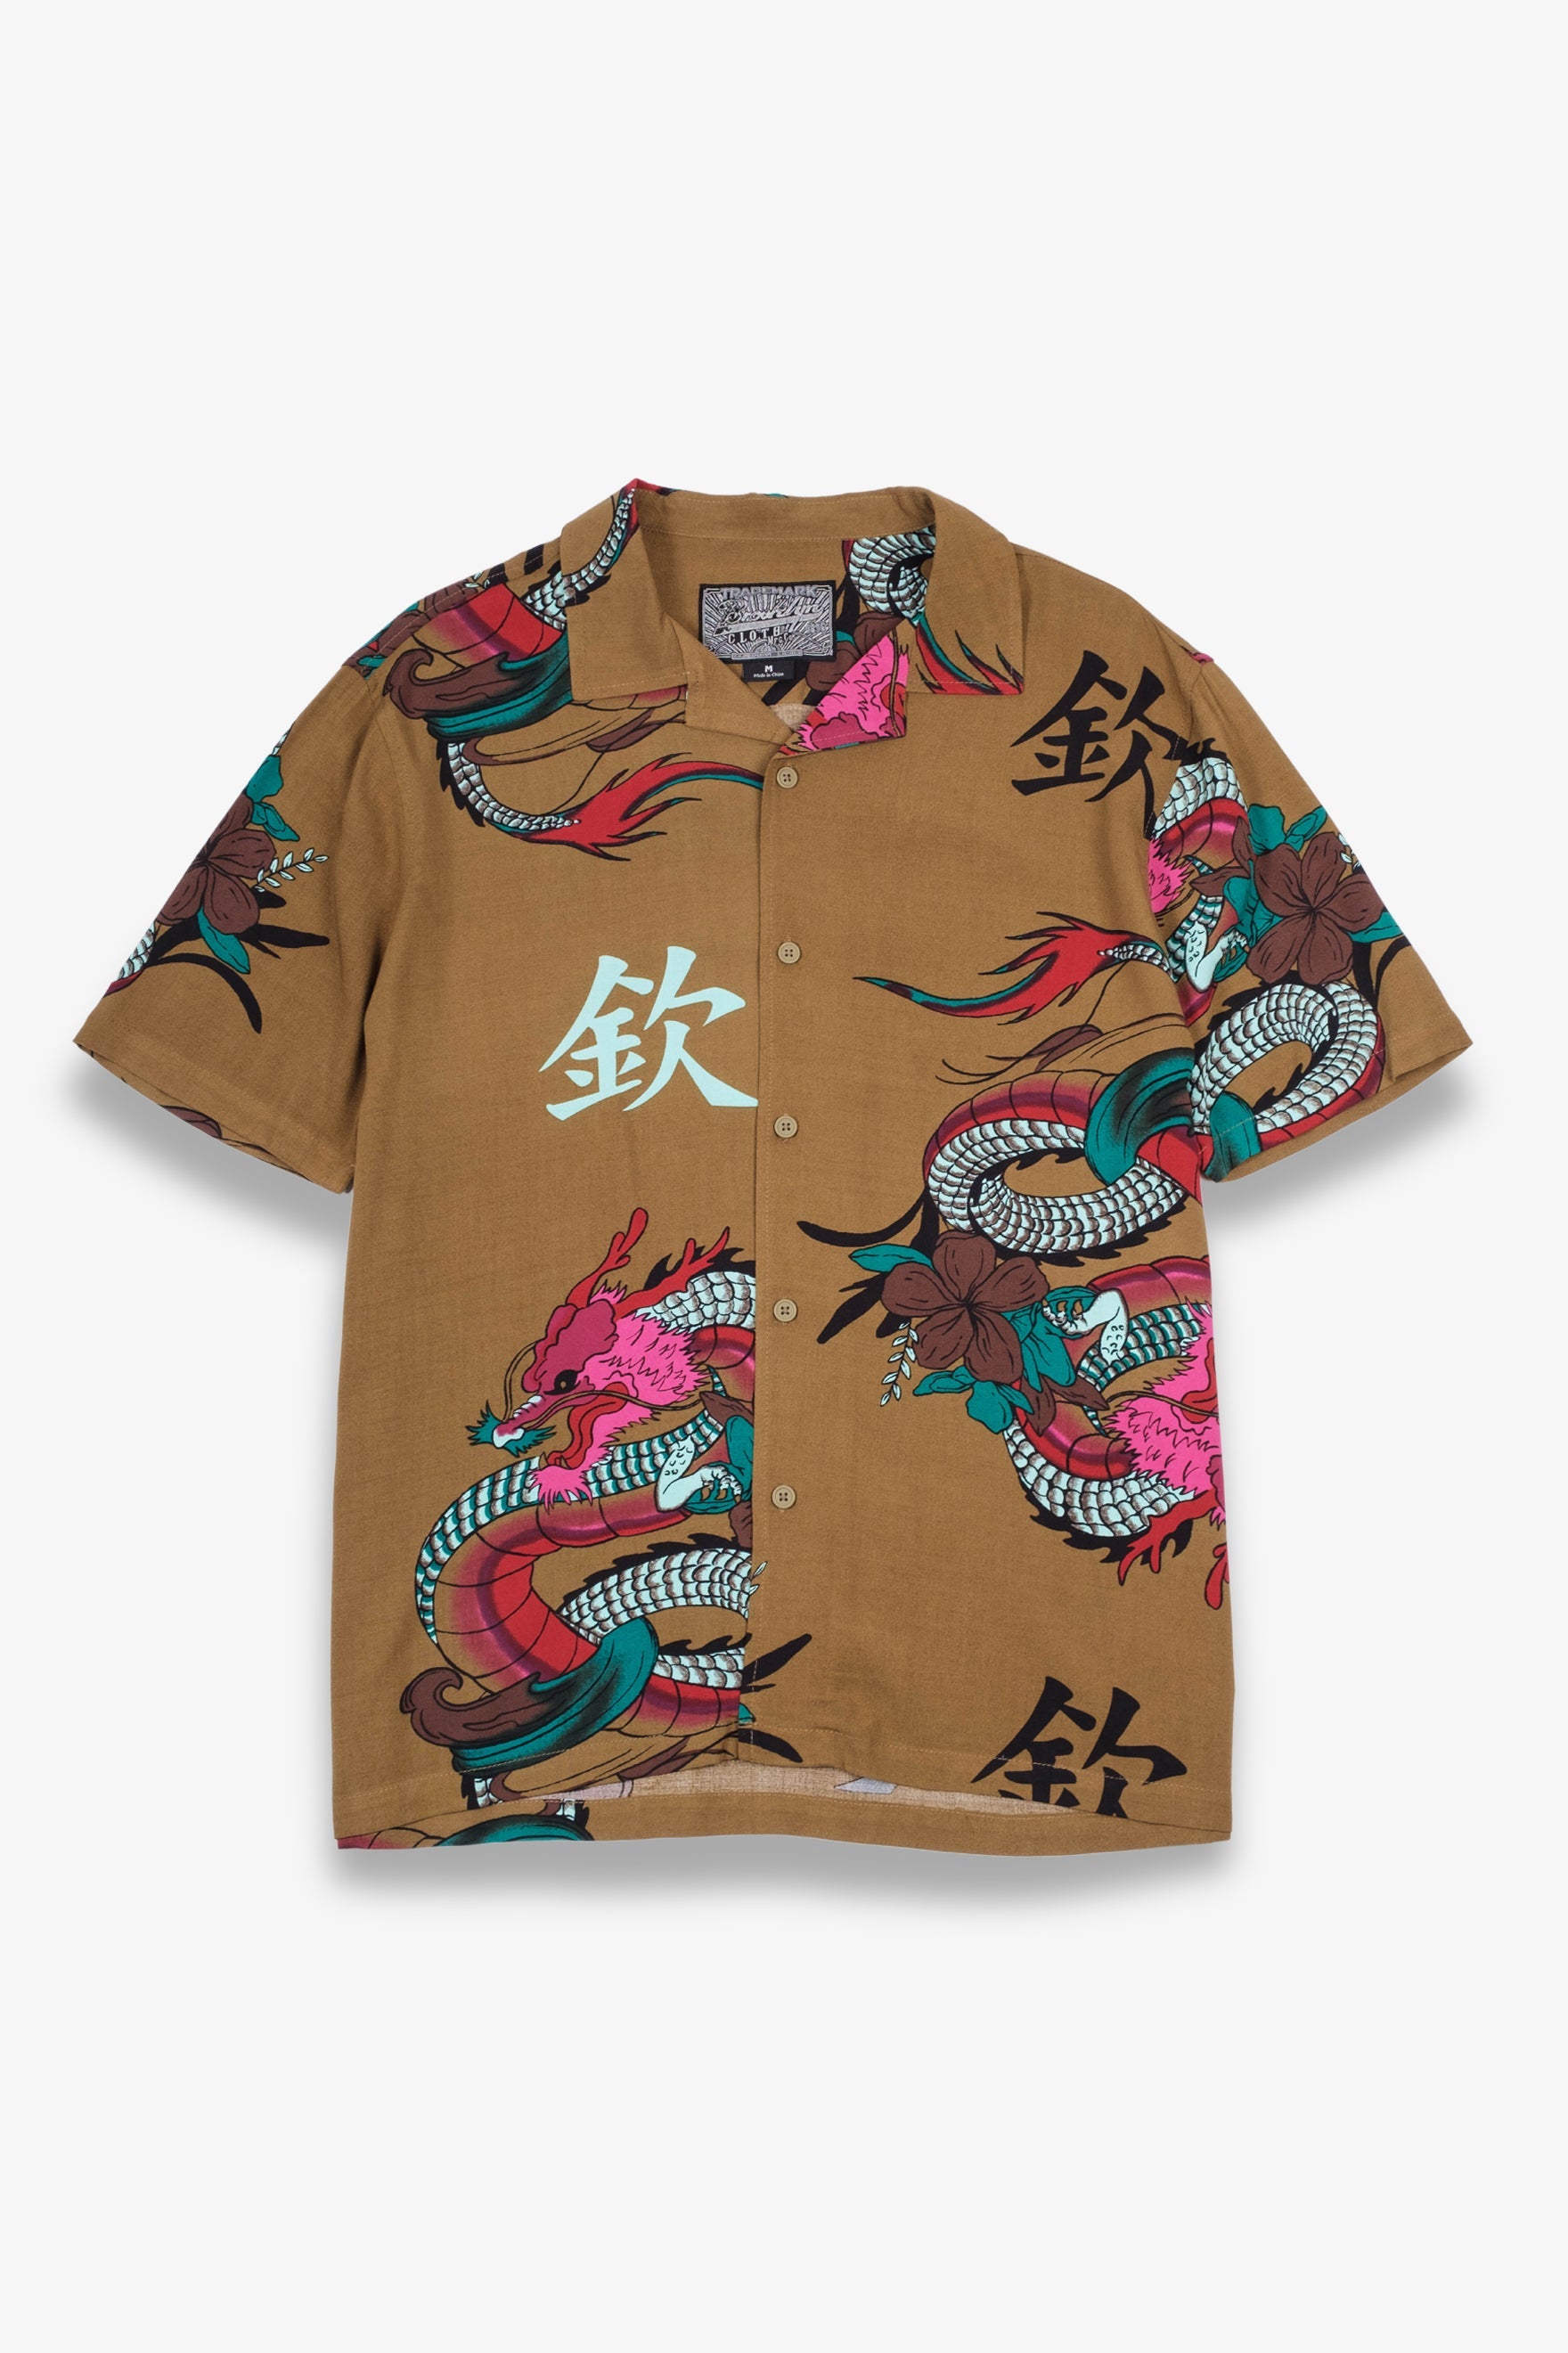 Fierce Dragon Rayon Shirt, Men's Top